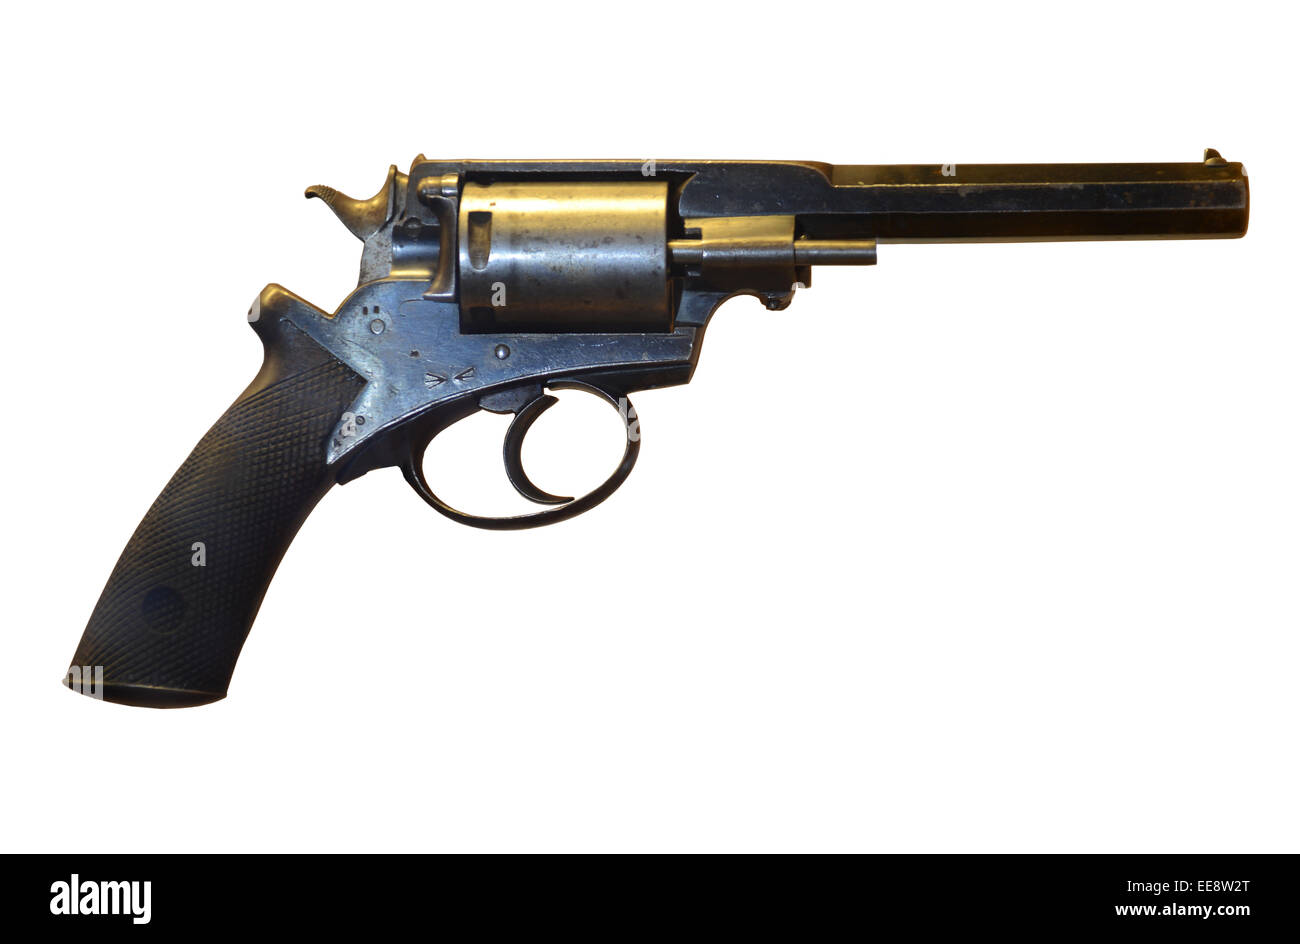 Adams Mark II revolver, fusil, pistolet sur fond blanc Banque D'Images